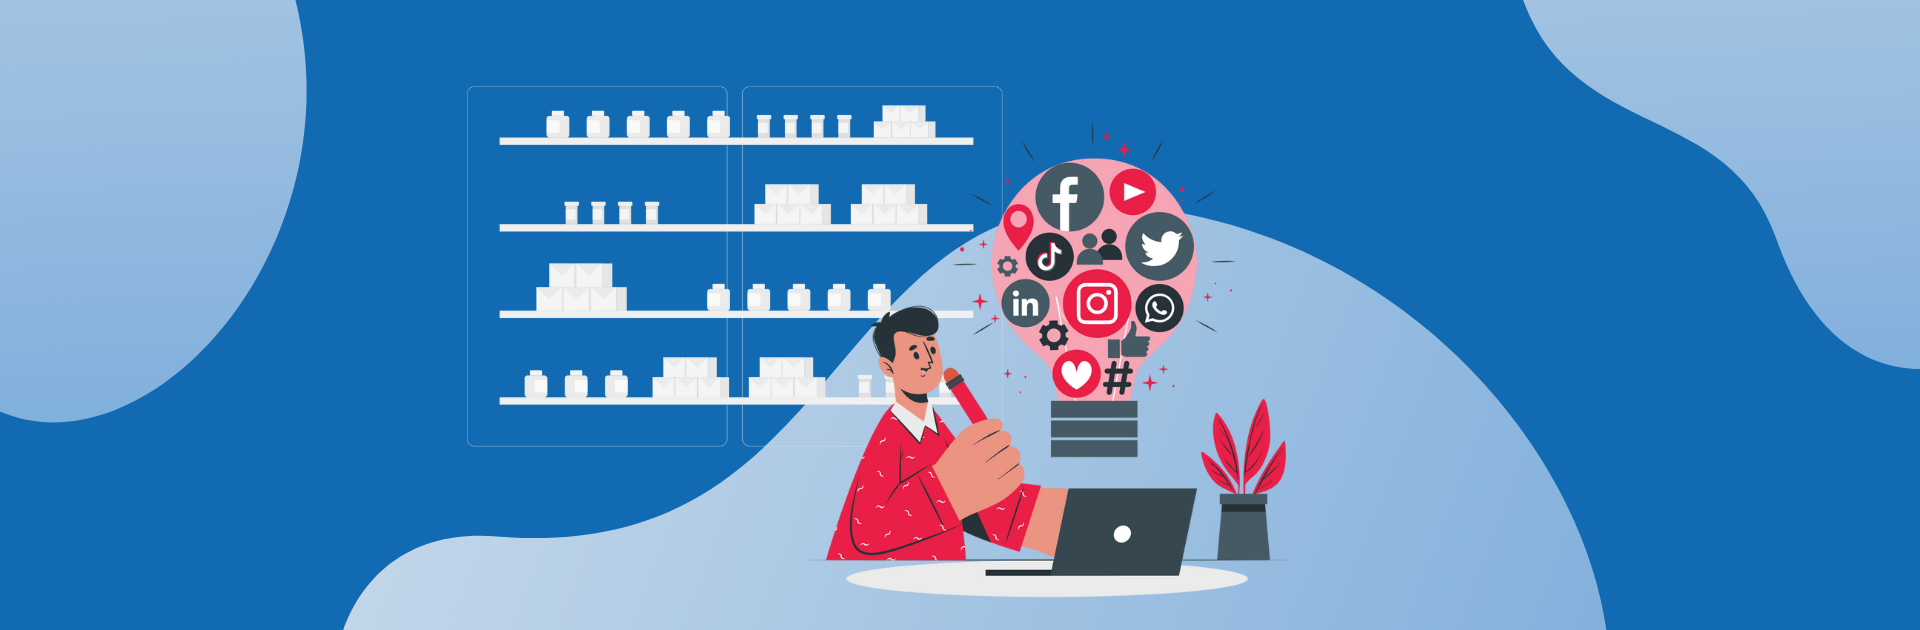 social media farmacia